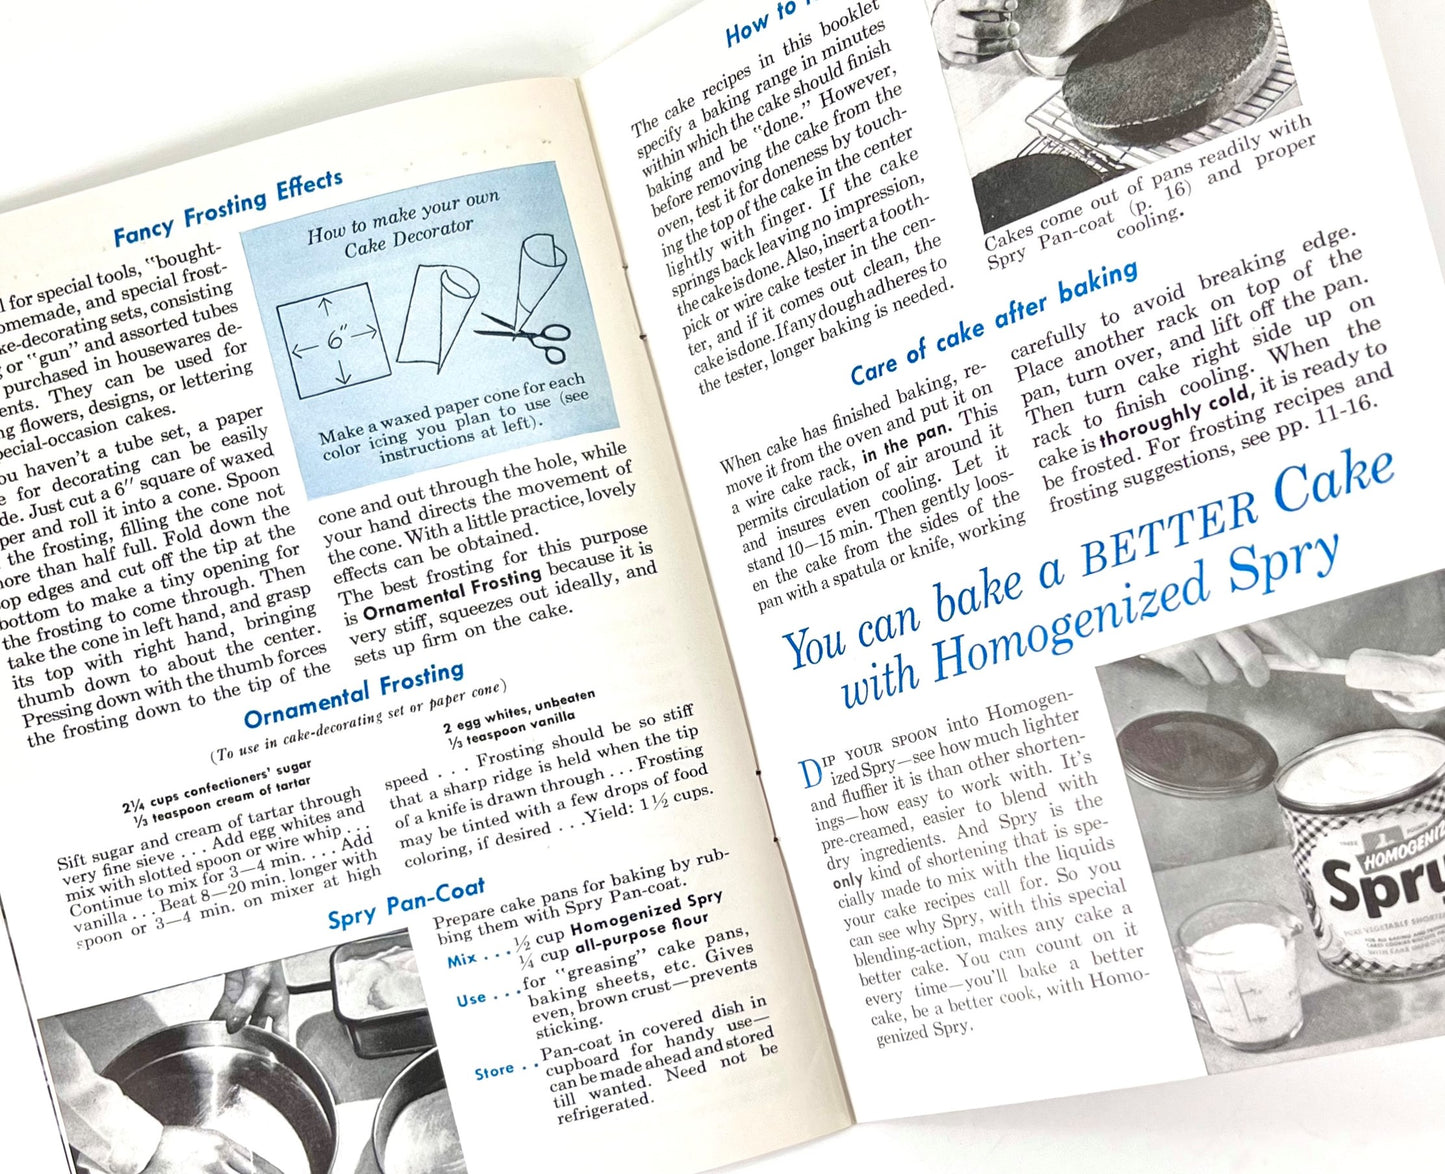 Spry Shortening's 10 Cakes Husbands Like Best Cookbooklet, 1940s